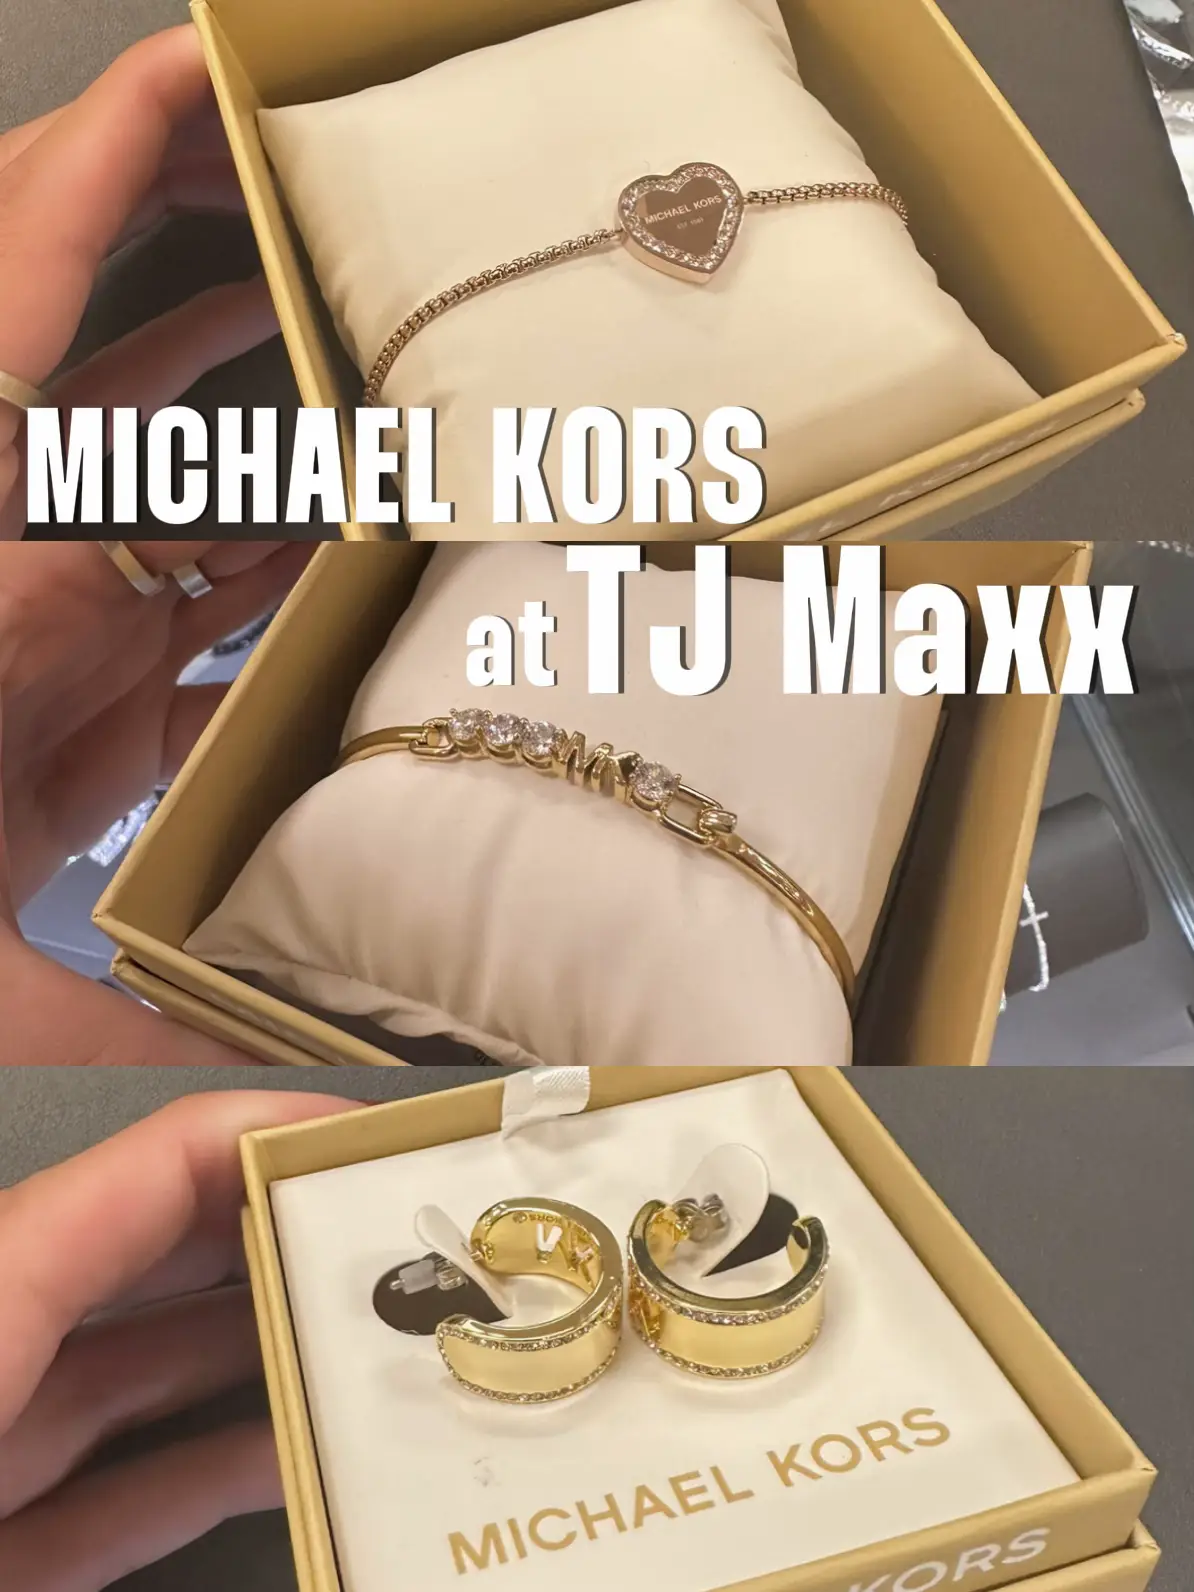 MICHAEL KORS MK BAGS SALE IN MARSHALLS AND TJ MAXX 